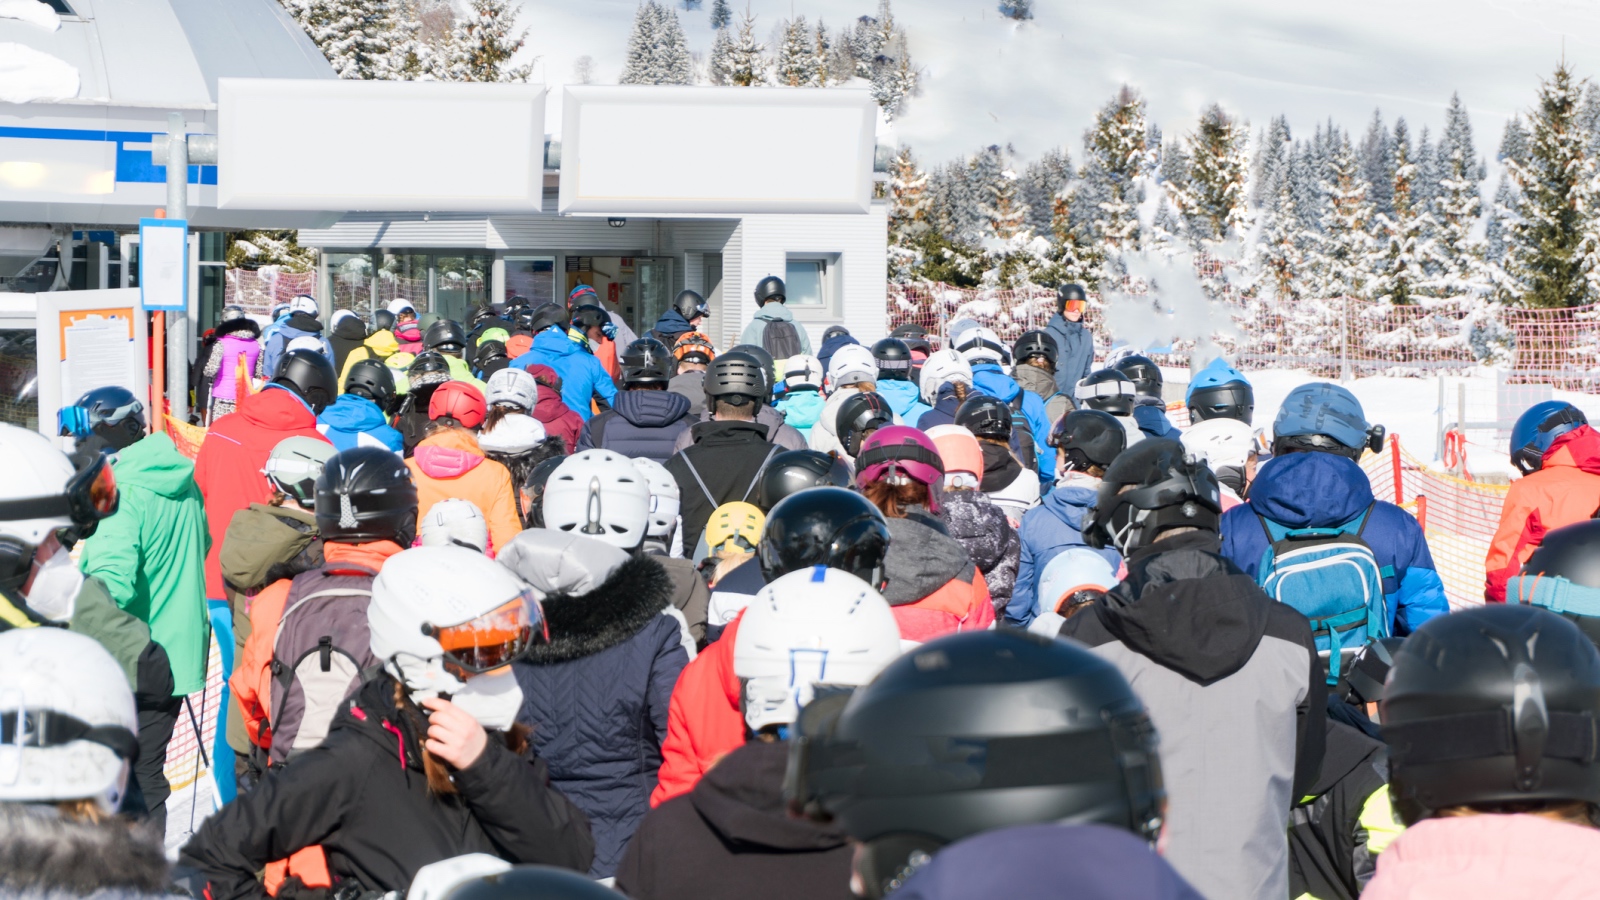 crowded ski lift wait lines